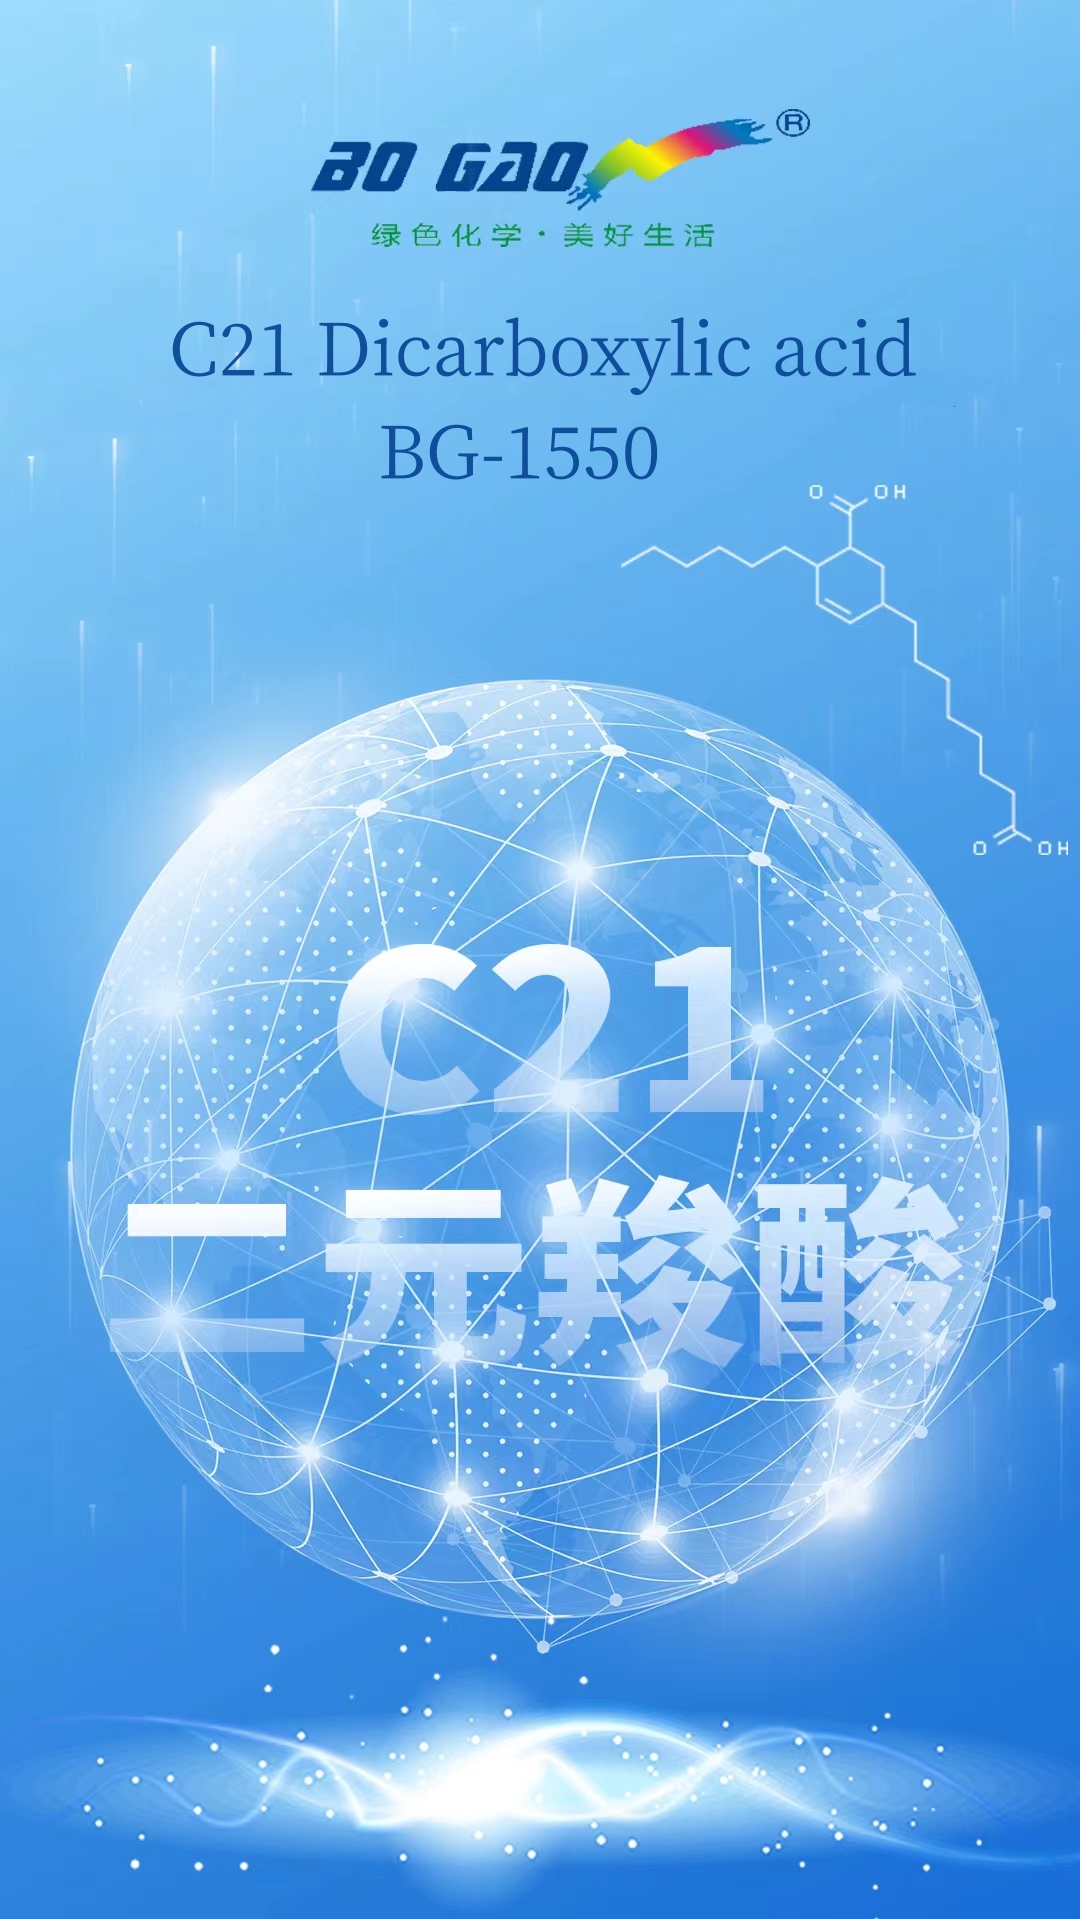 BoGao Launches Multifunctional Application-C21 Dicarboxylic acid/BG-1550